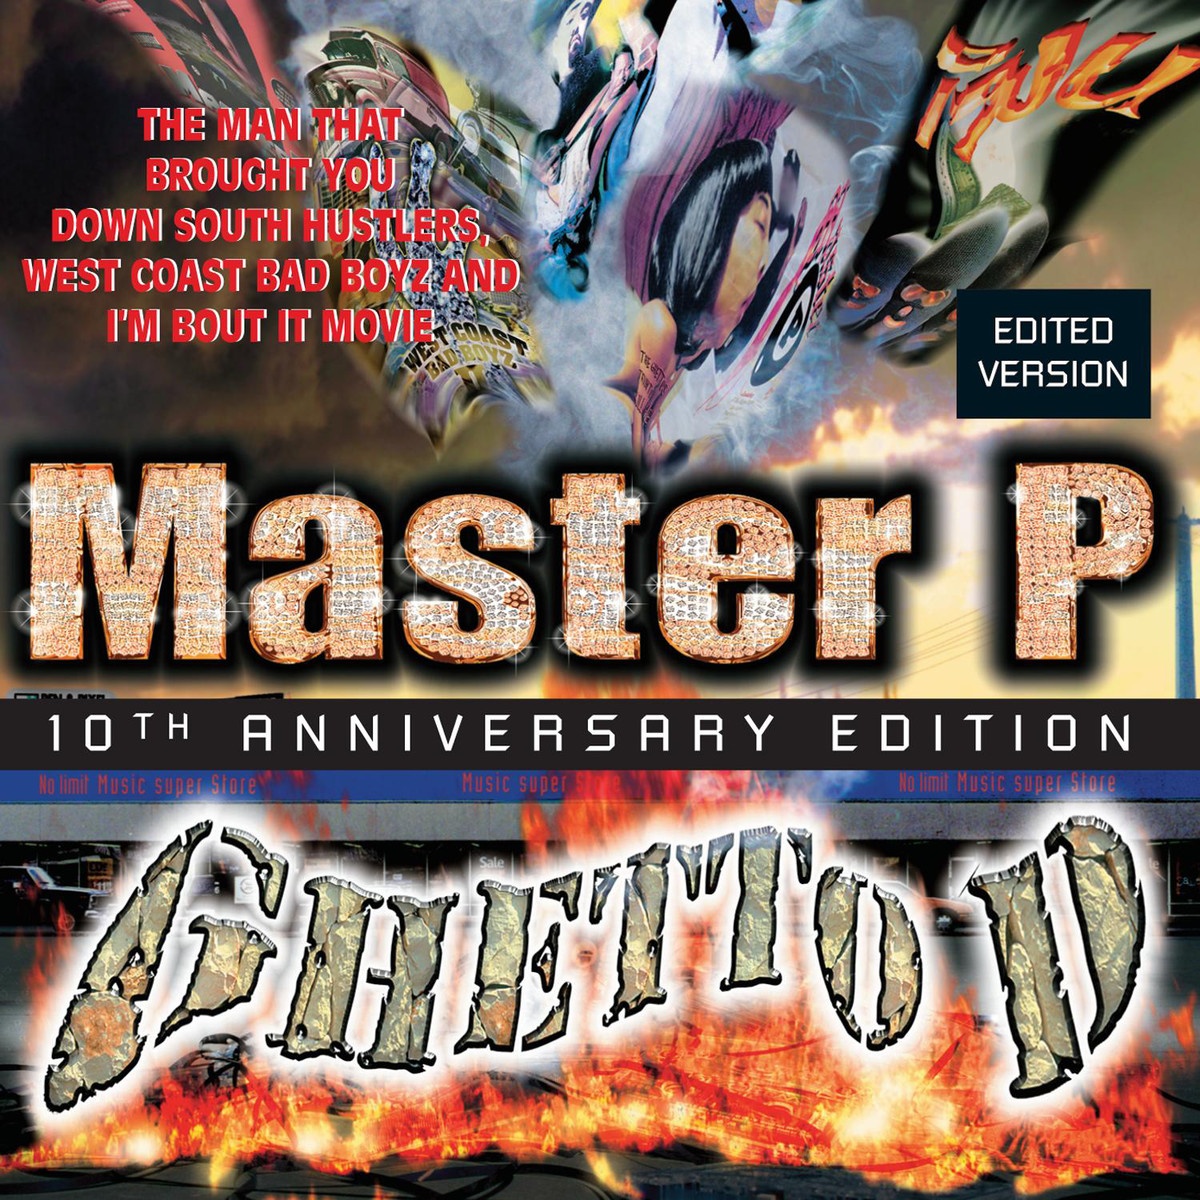 Ghetto D (2005 Digital Remaster)